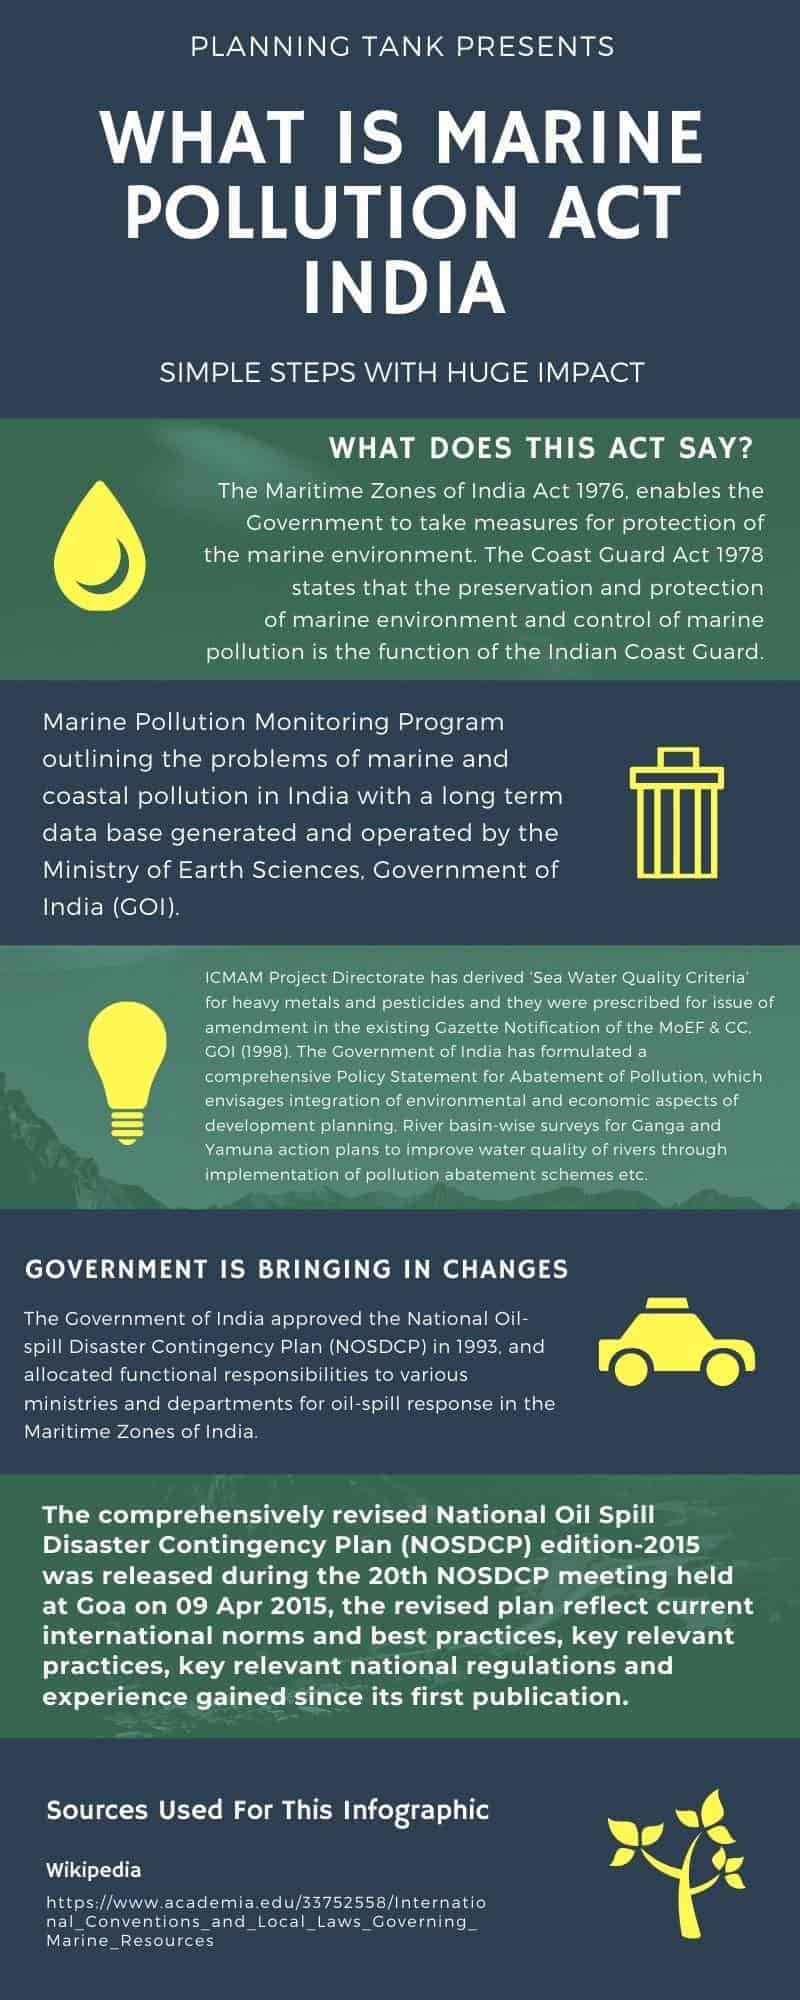 marine pollution act India| Planning Tank